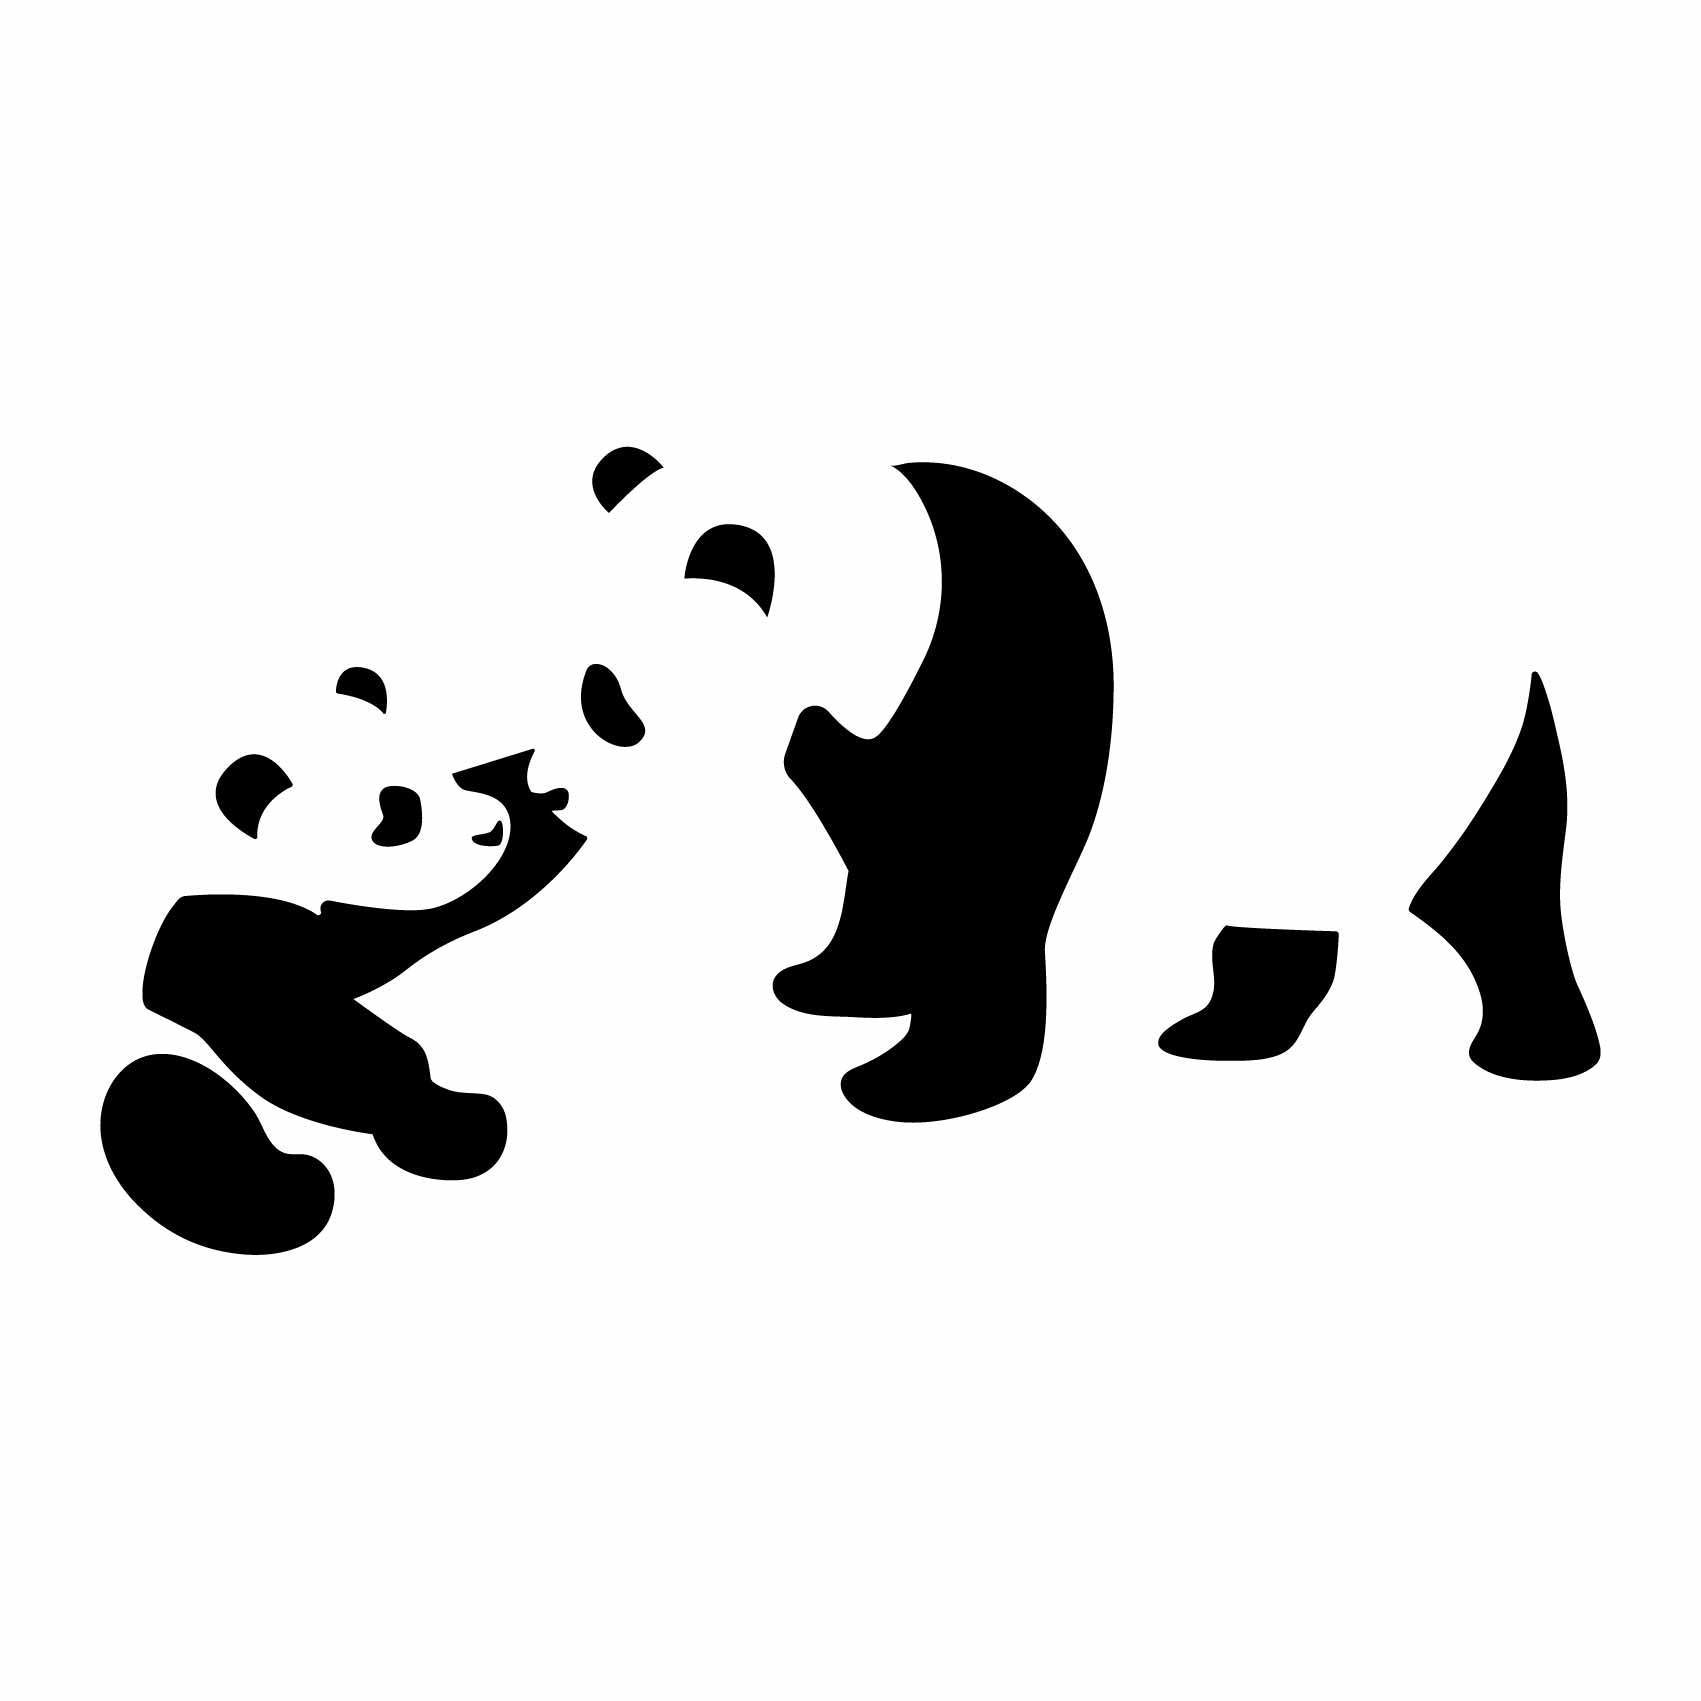 stickers-famille-panda-ref7panda-stickers-muraux-panda-autocollant-chambre-salon-deco-sticker-mural-pandas-animaux-(2)